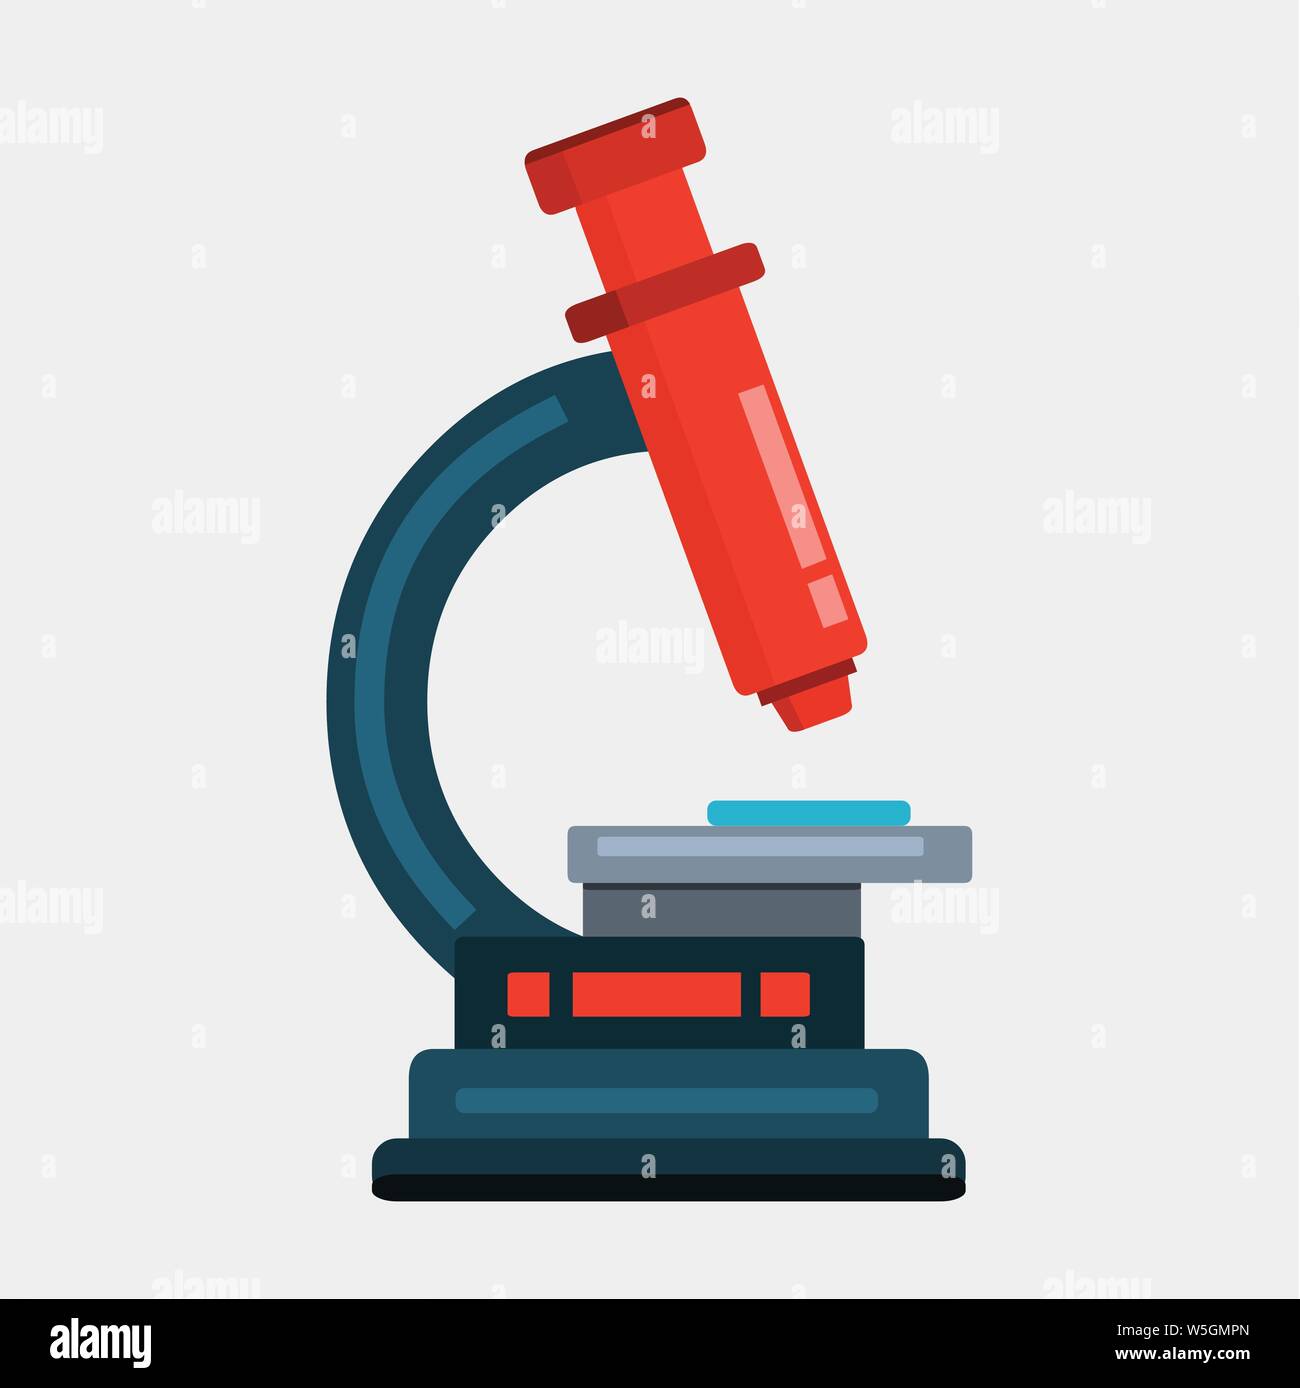 Mikroskop vector illustration symbol Stock-Vektorgrafik - Alamy